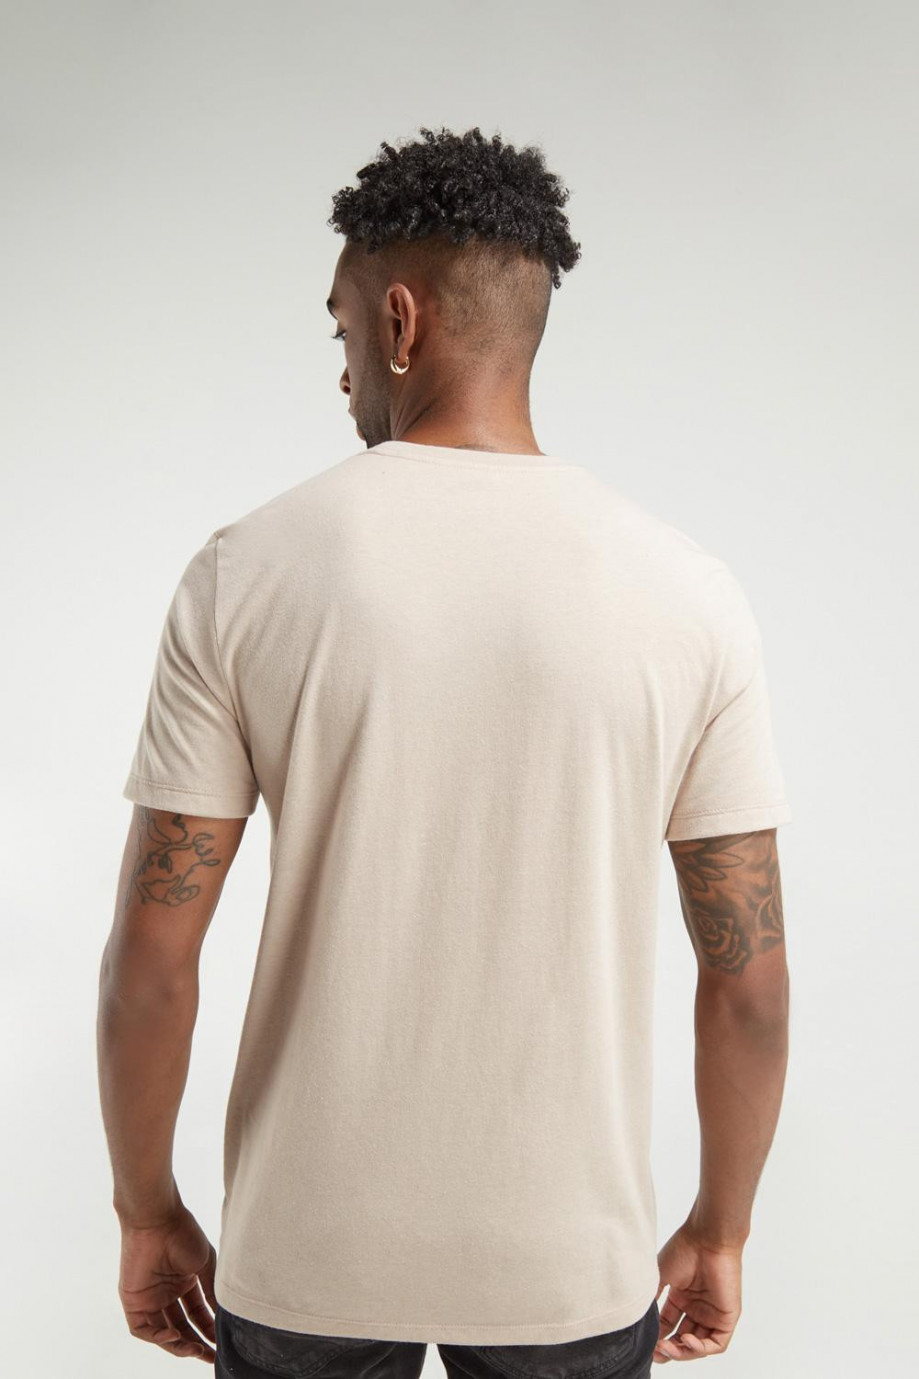 Camiseta básica manga corta con estampado